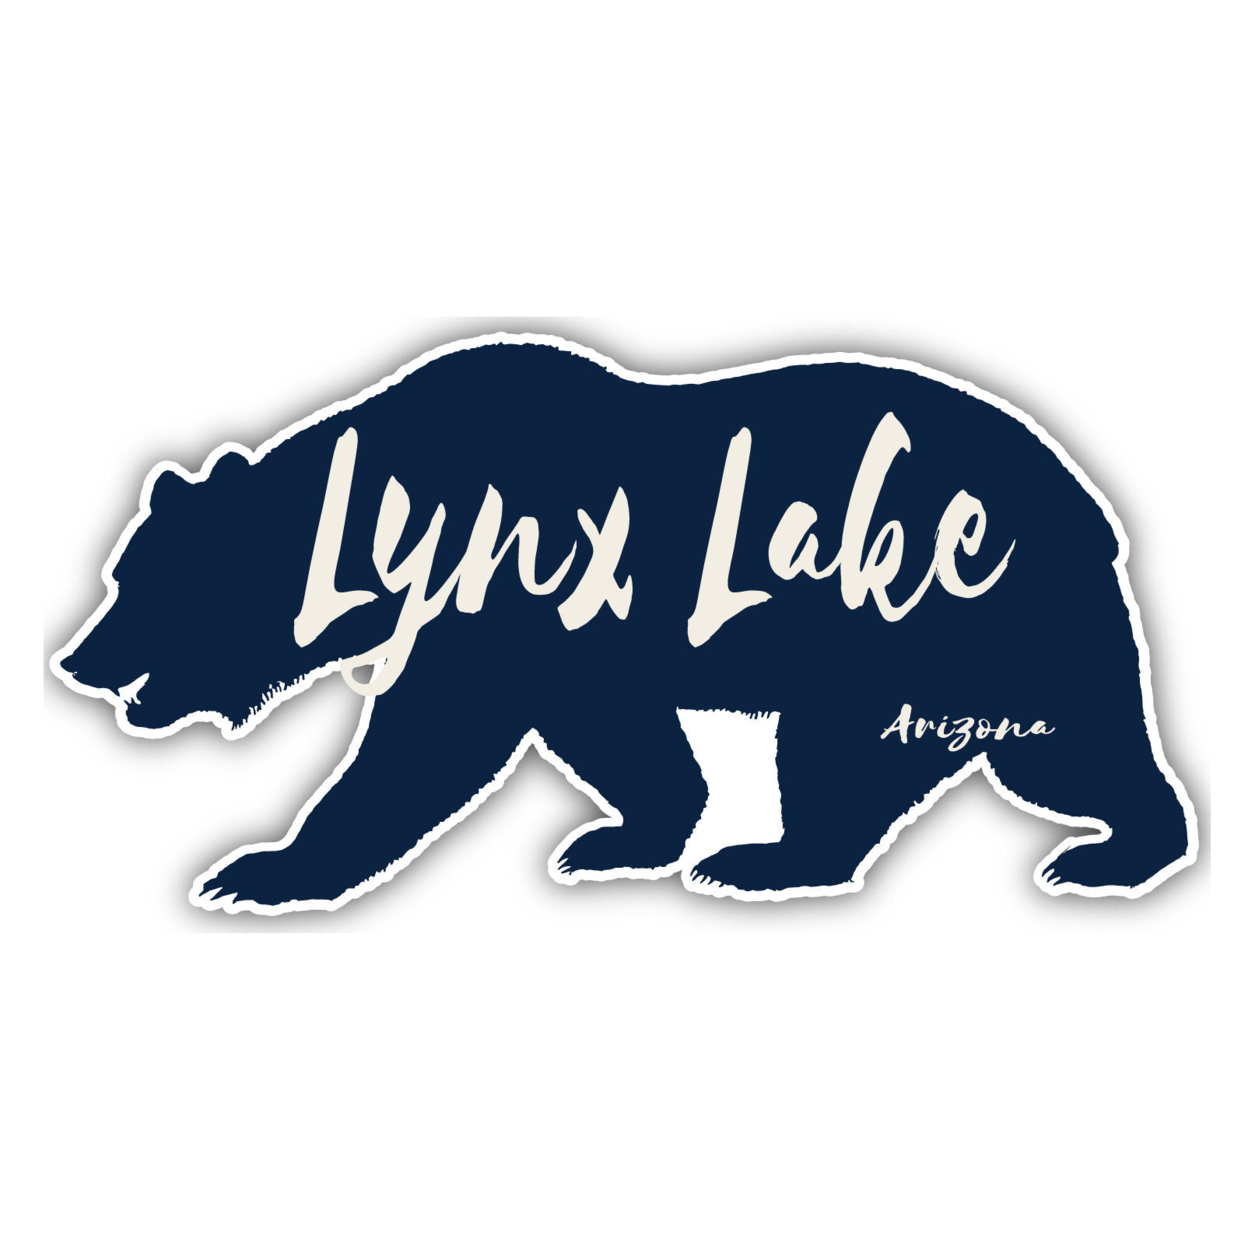 Lynx Lake Arizona Souvenir Decorative Stickers (Choose Theme And Size) - 4-Inch, Tent